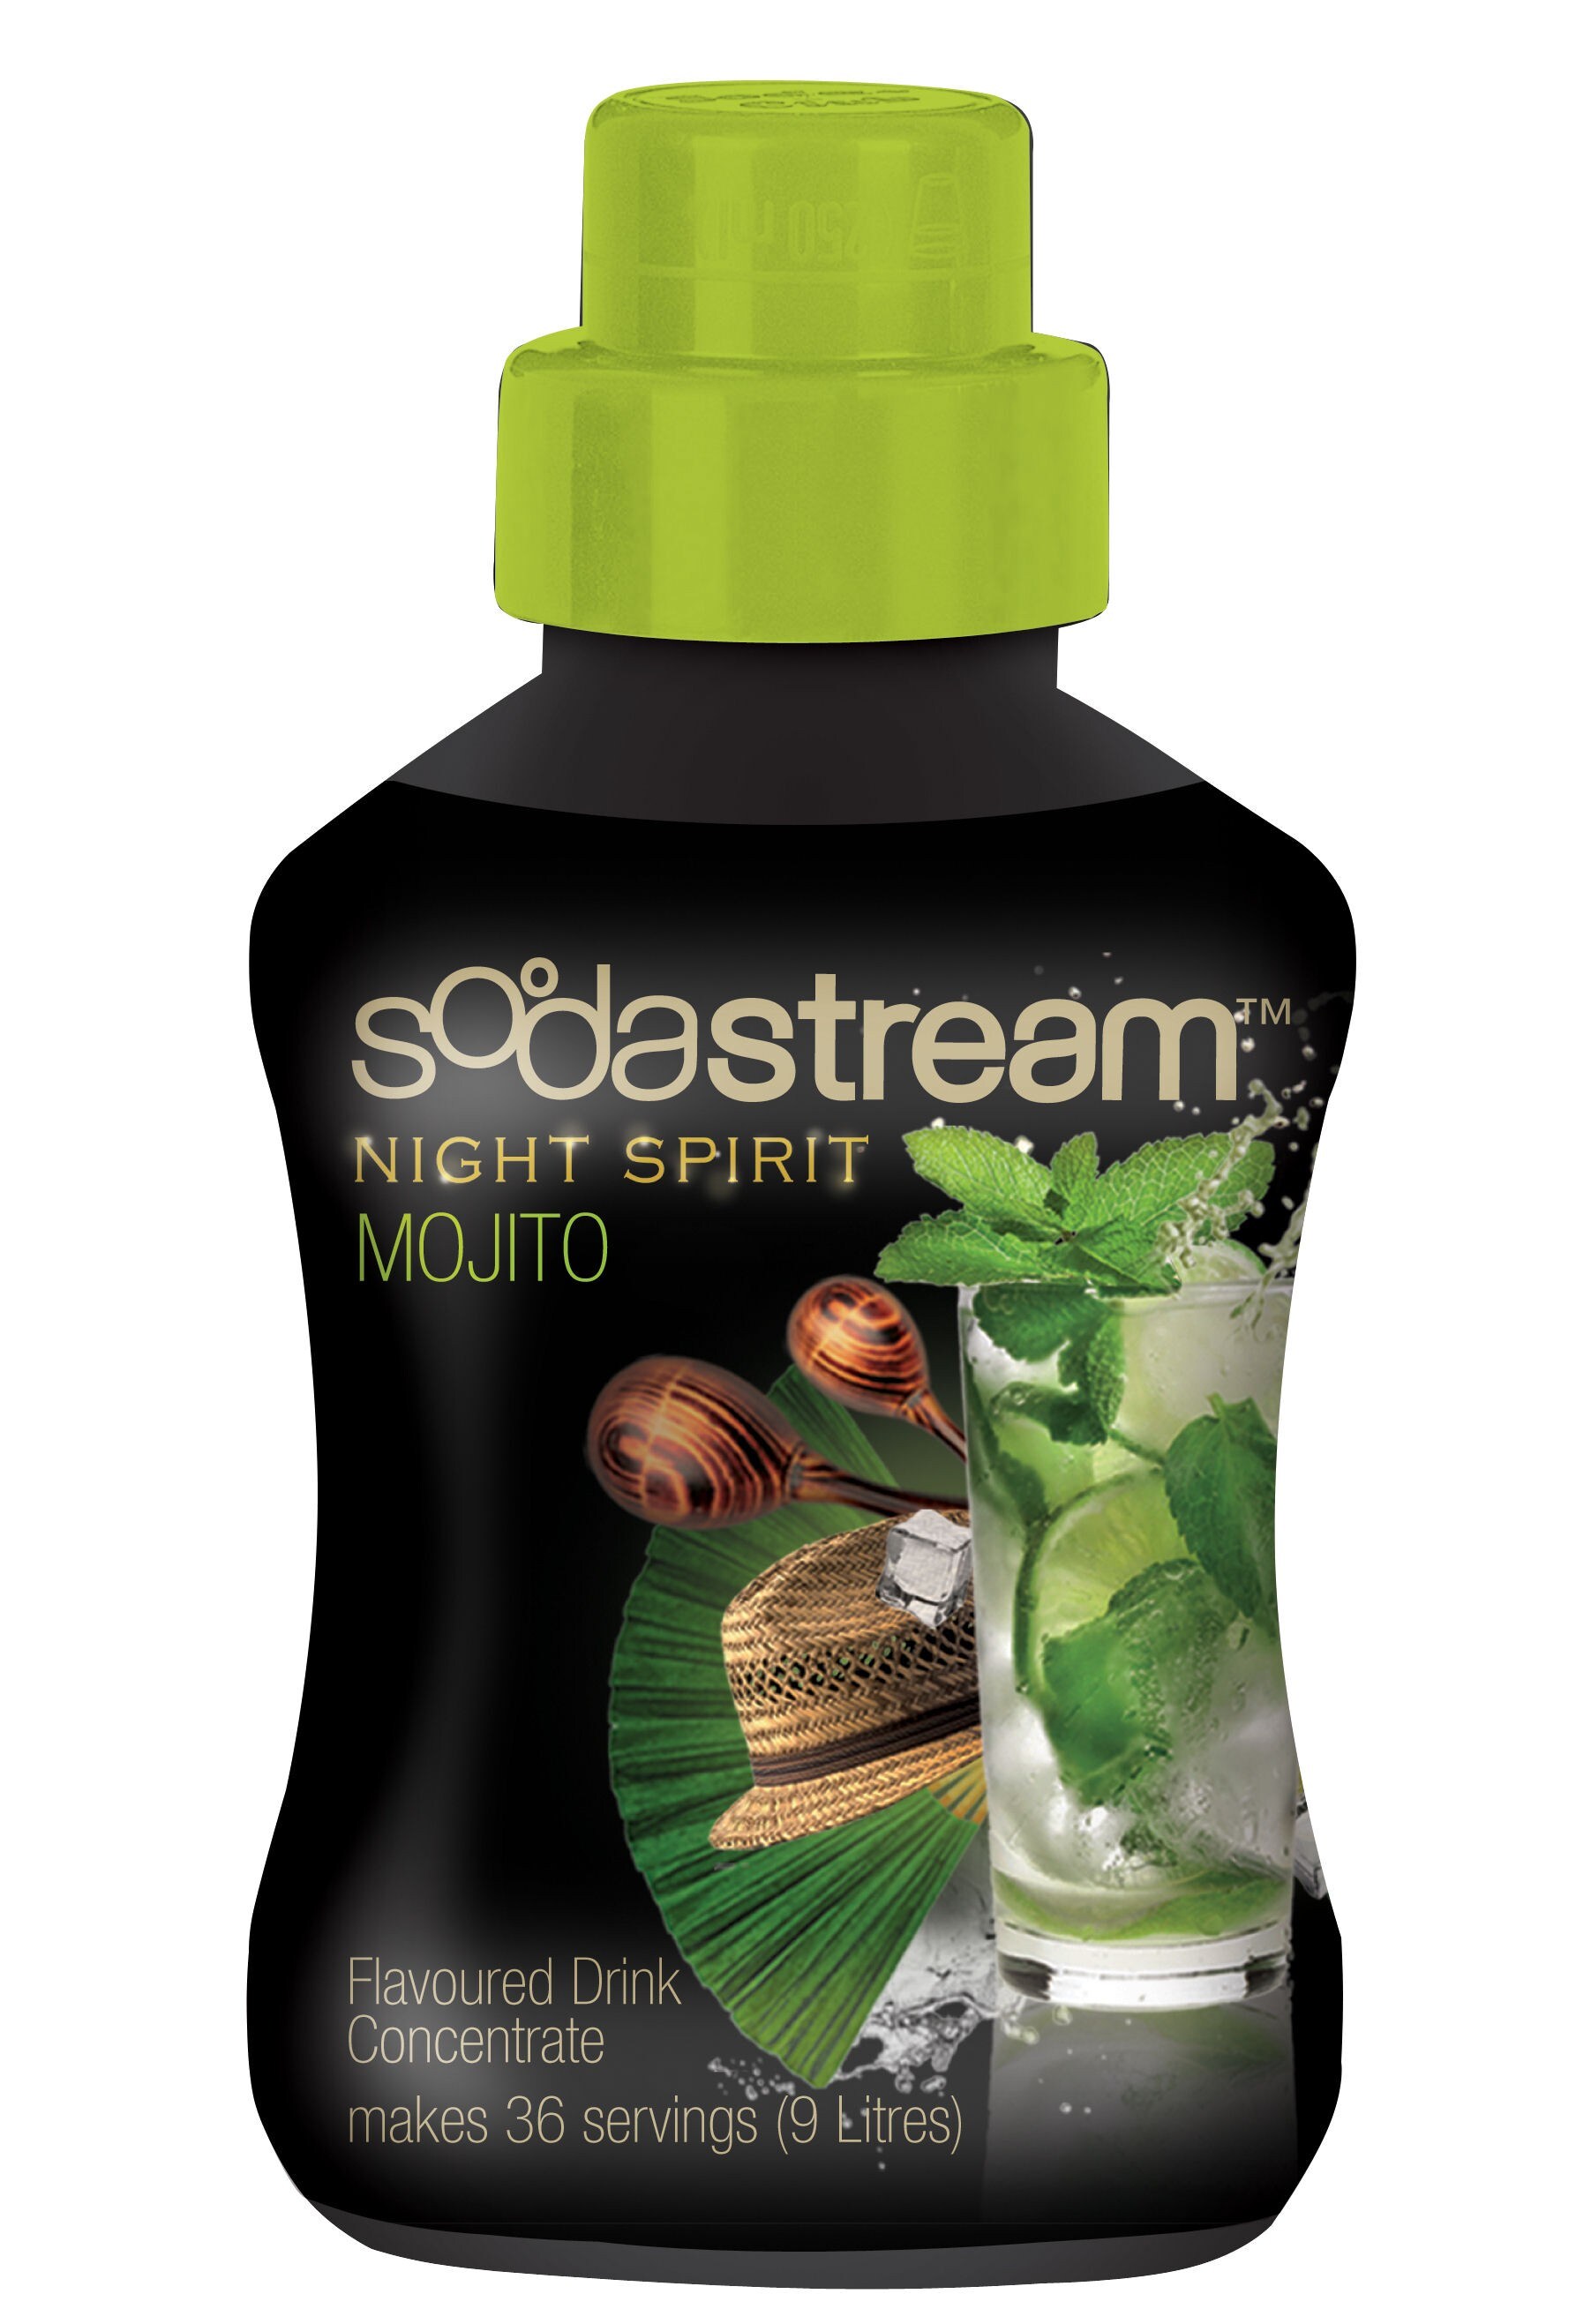 Sodastream Night Spirit med smag af Mojito - Sodavandsmaskiner ...